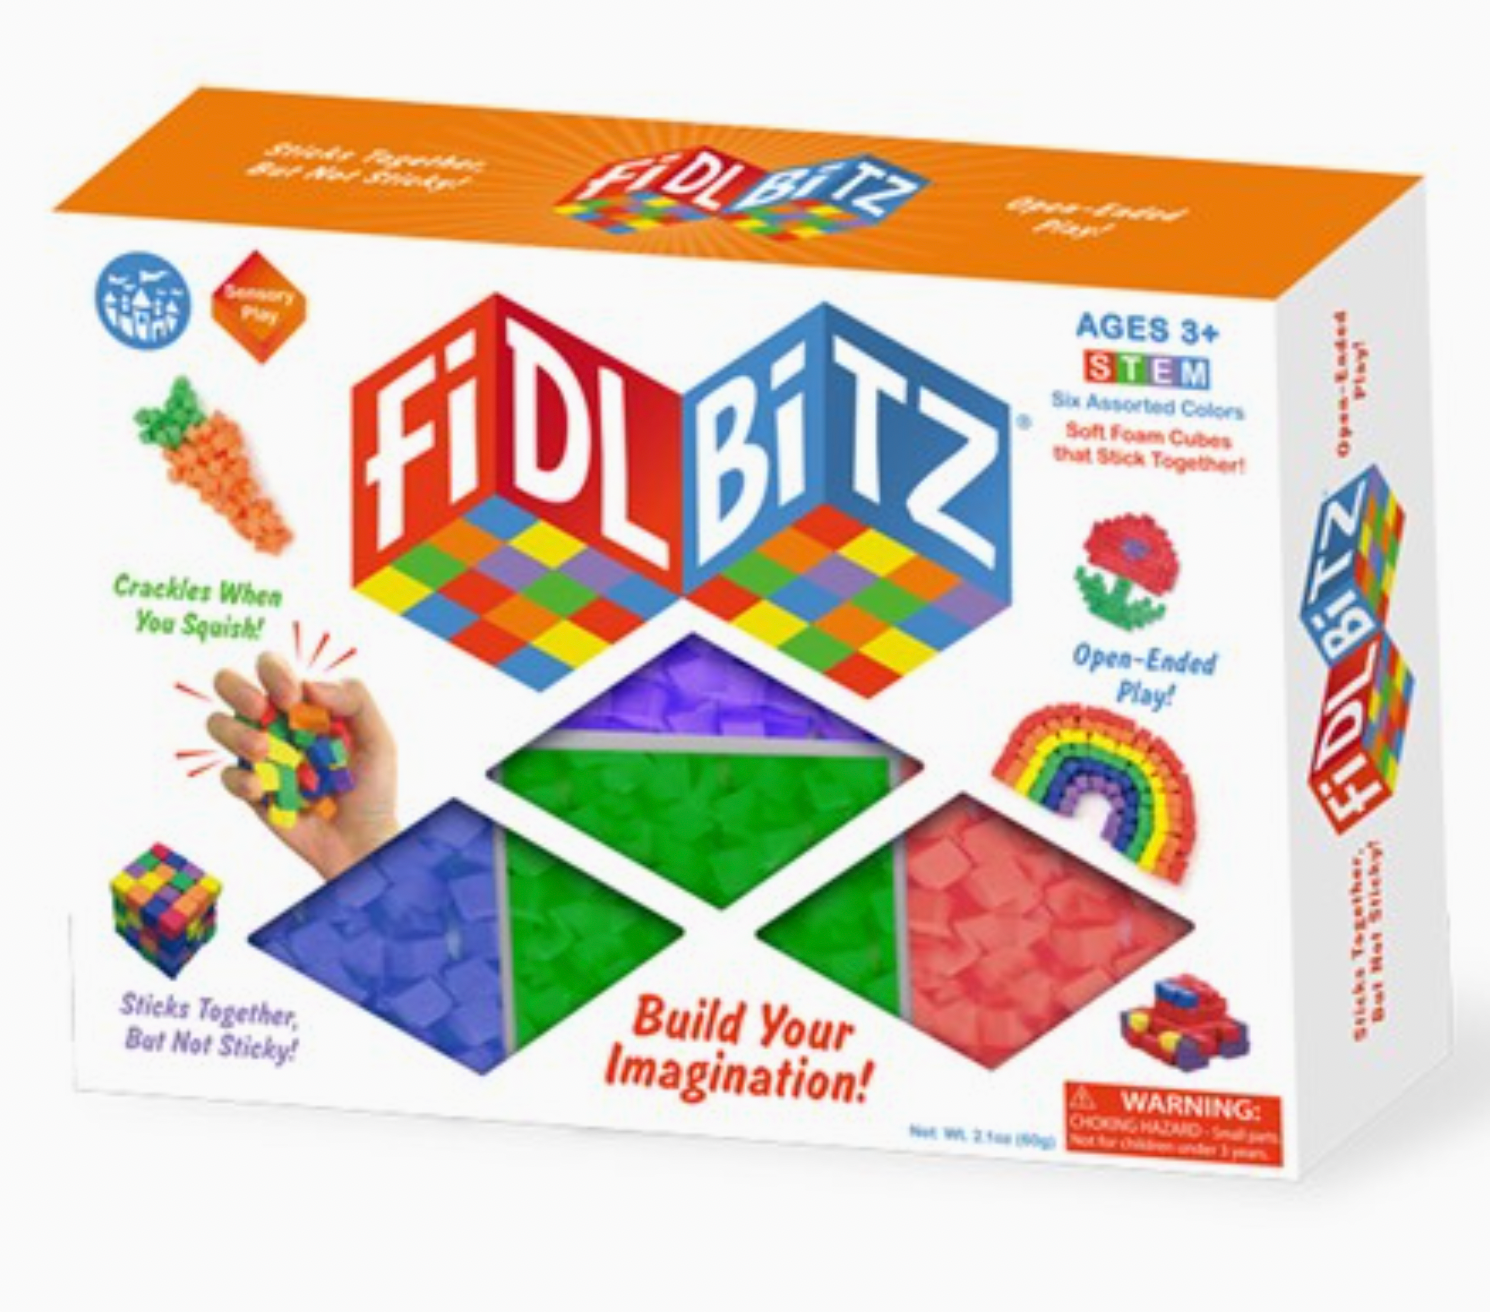 Fidlbitz Deluxe Set- Foam Blocks